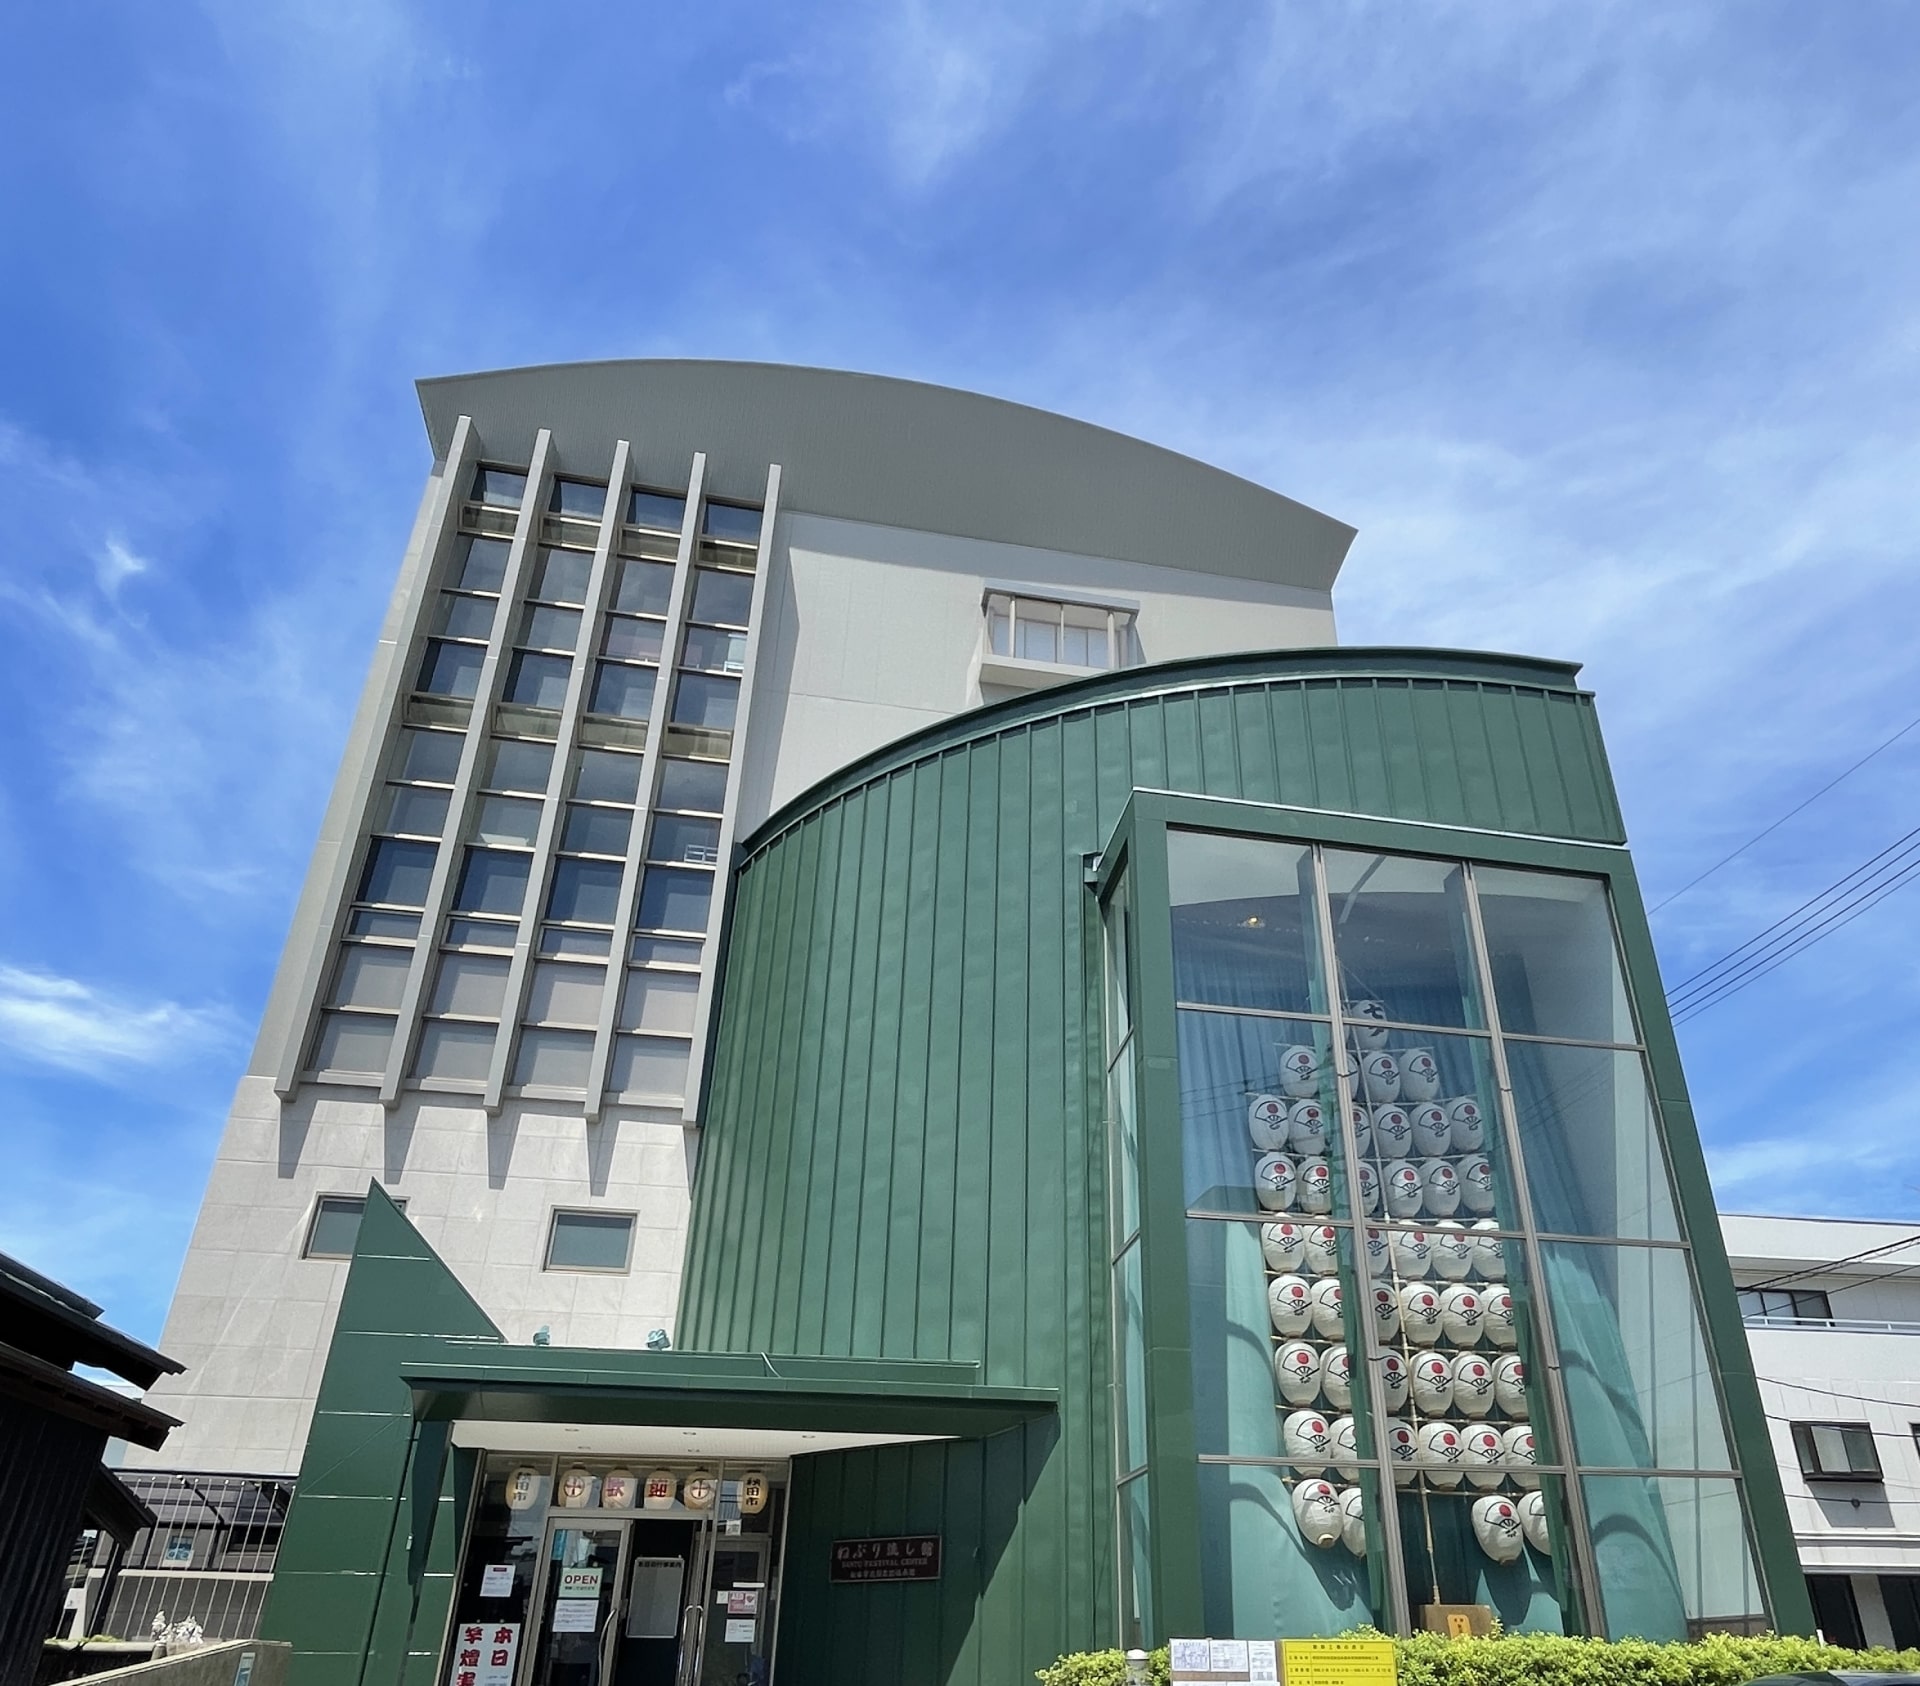 Akita City Folklore and Performing Arts Center